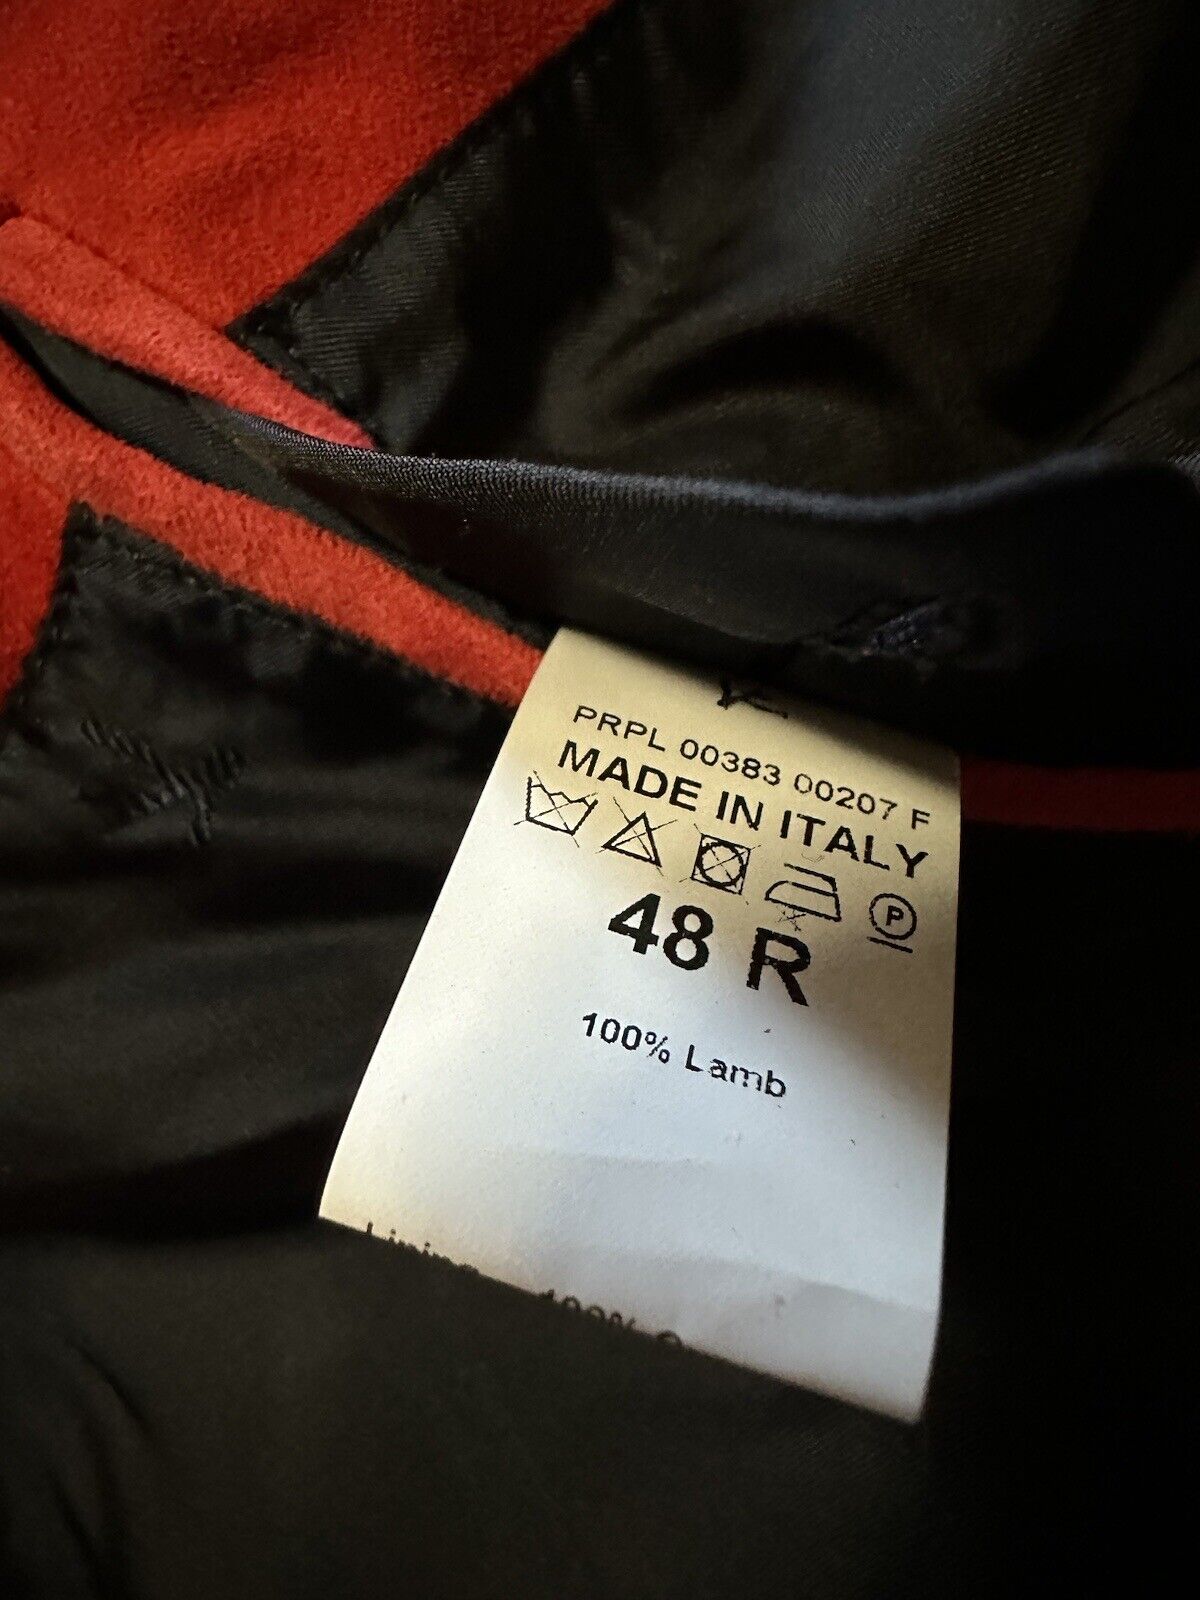 New $4995 Isaia Portofino AQUA Suede Jacket MD Red 38 US/48 Eu Italy